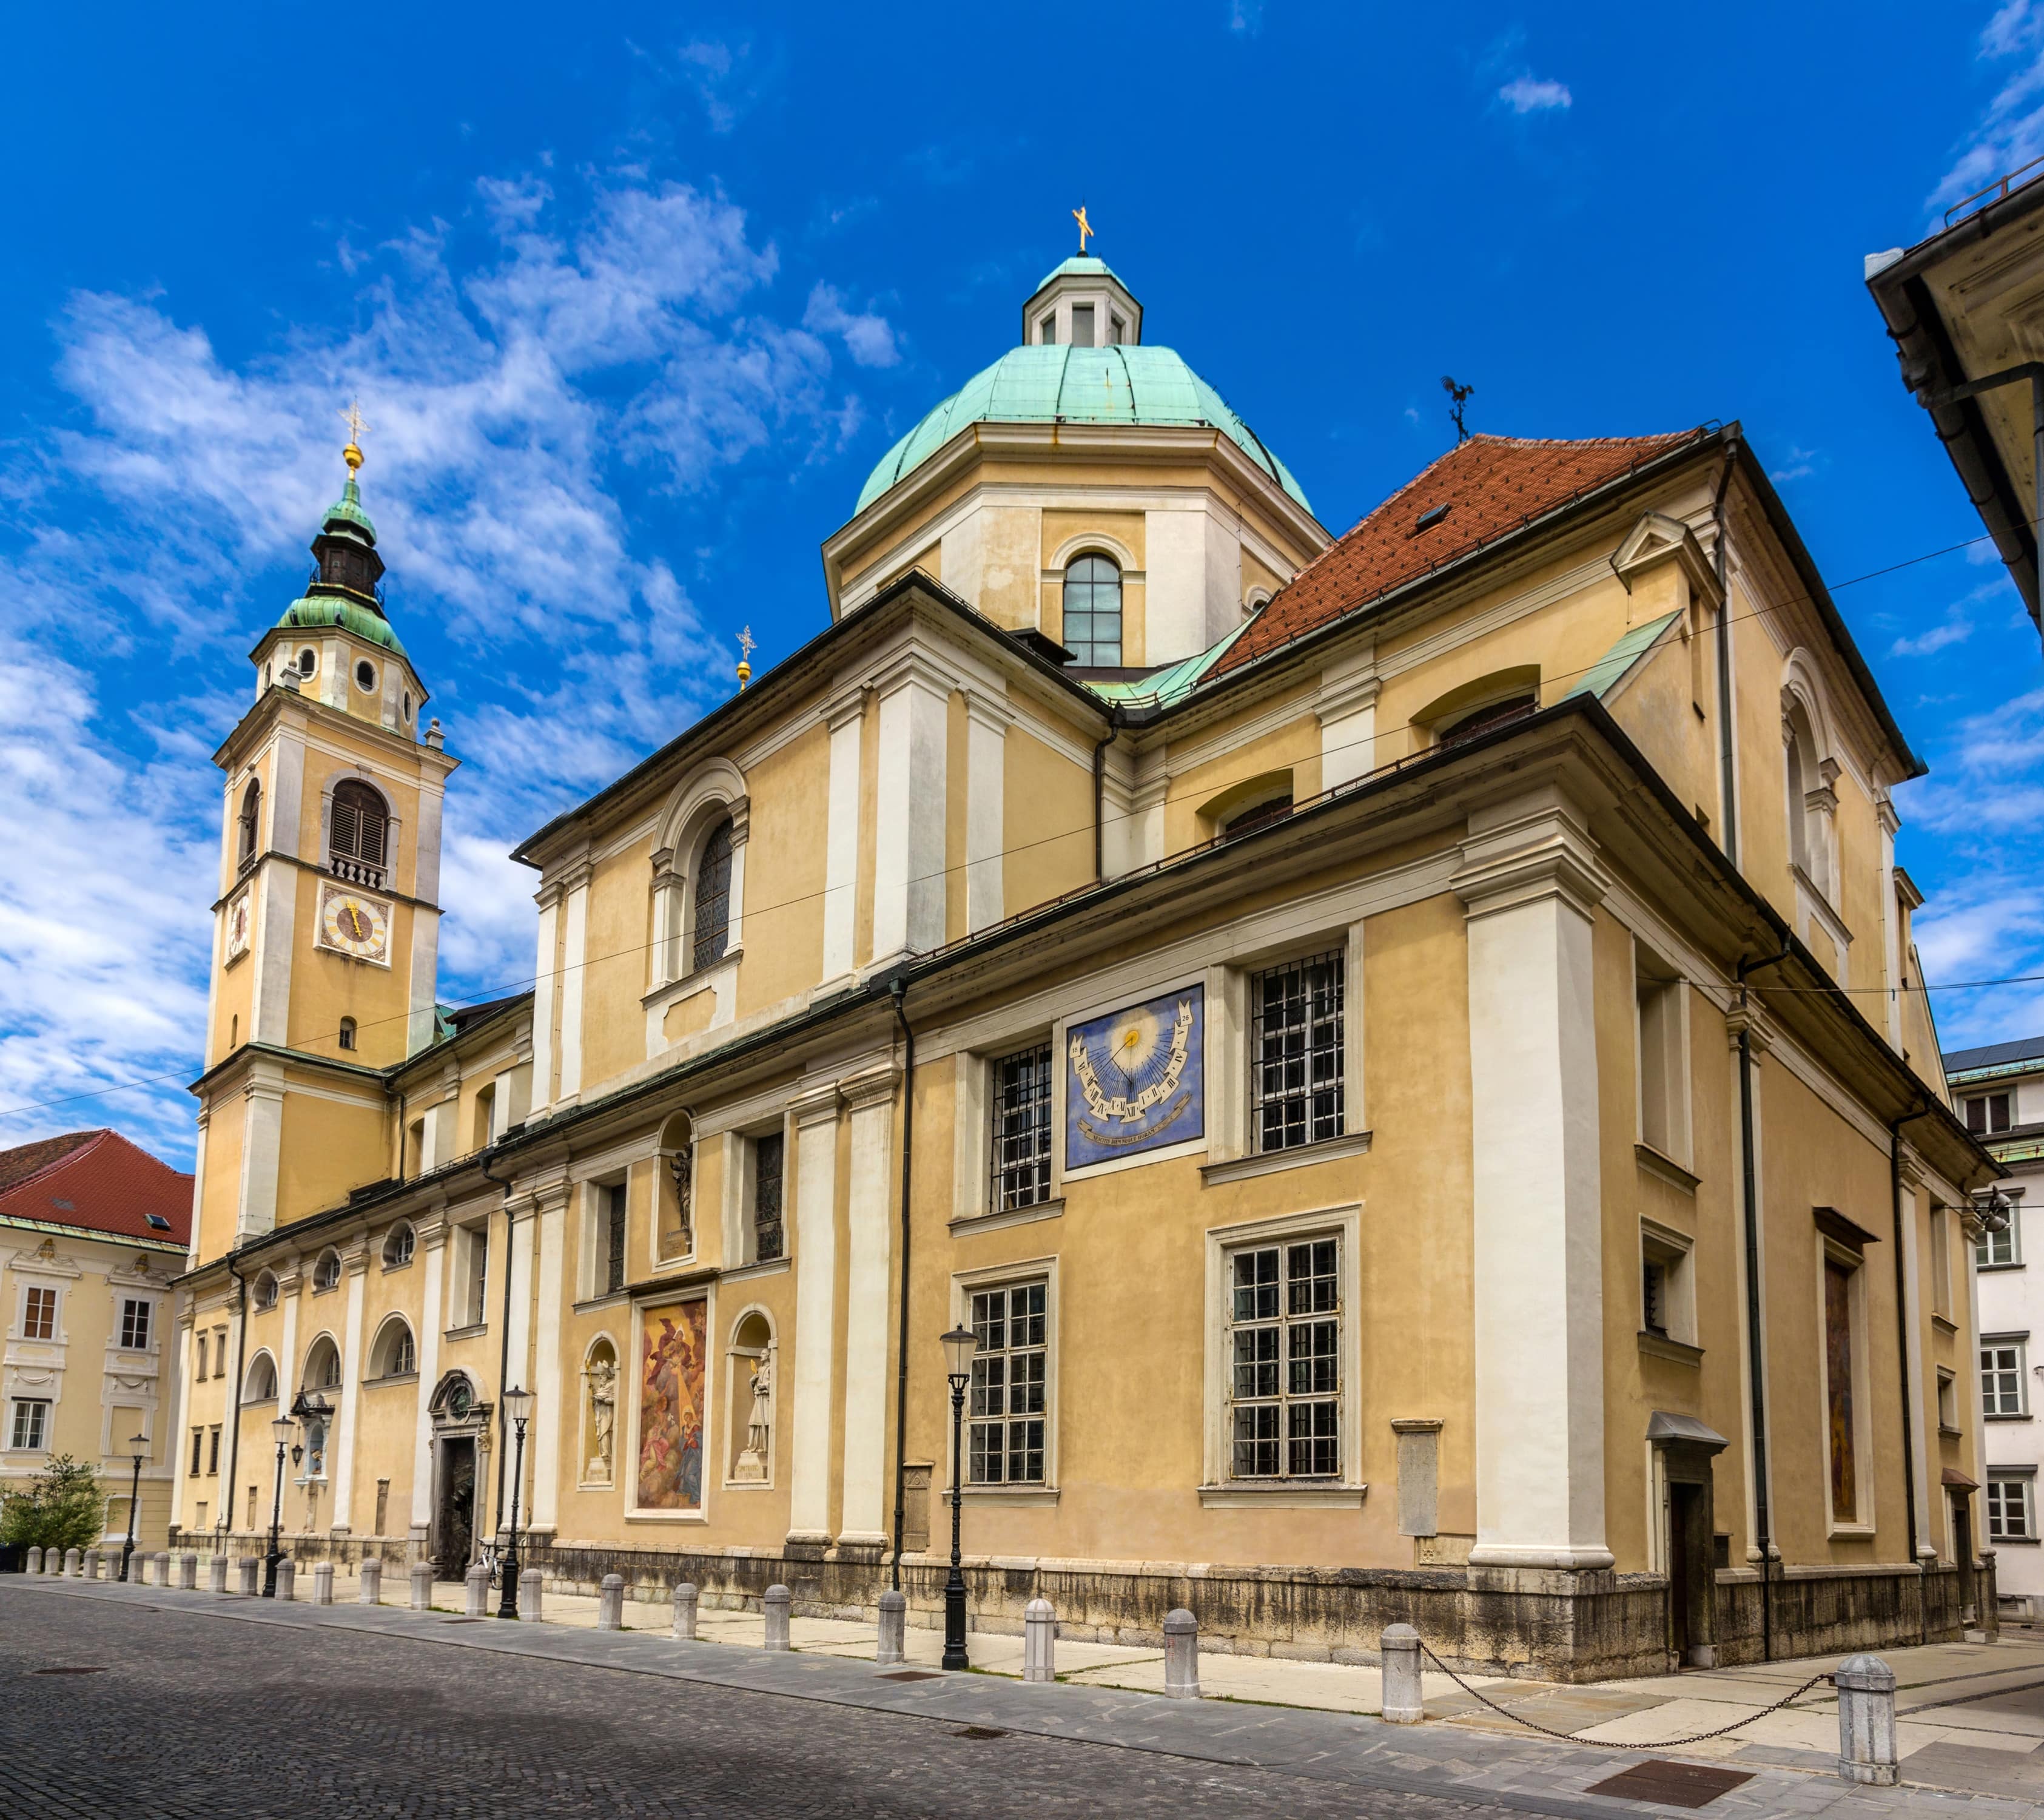 St Nicholas Cathedral in Ljubljana